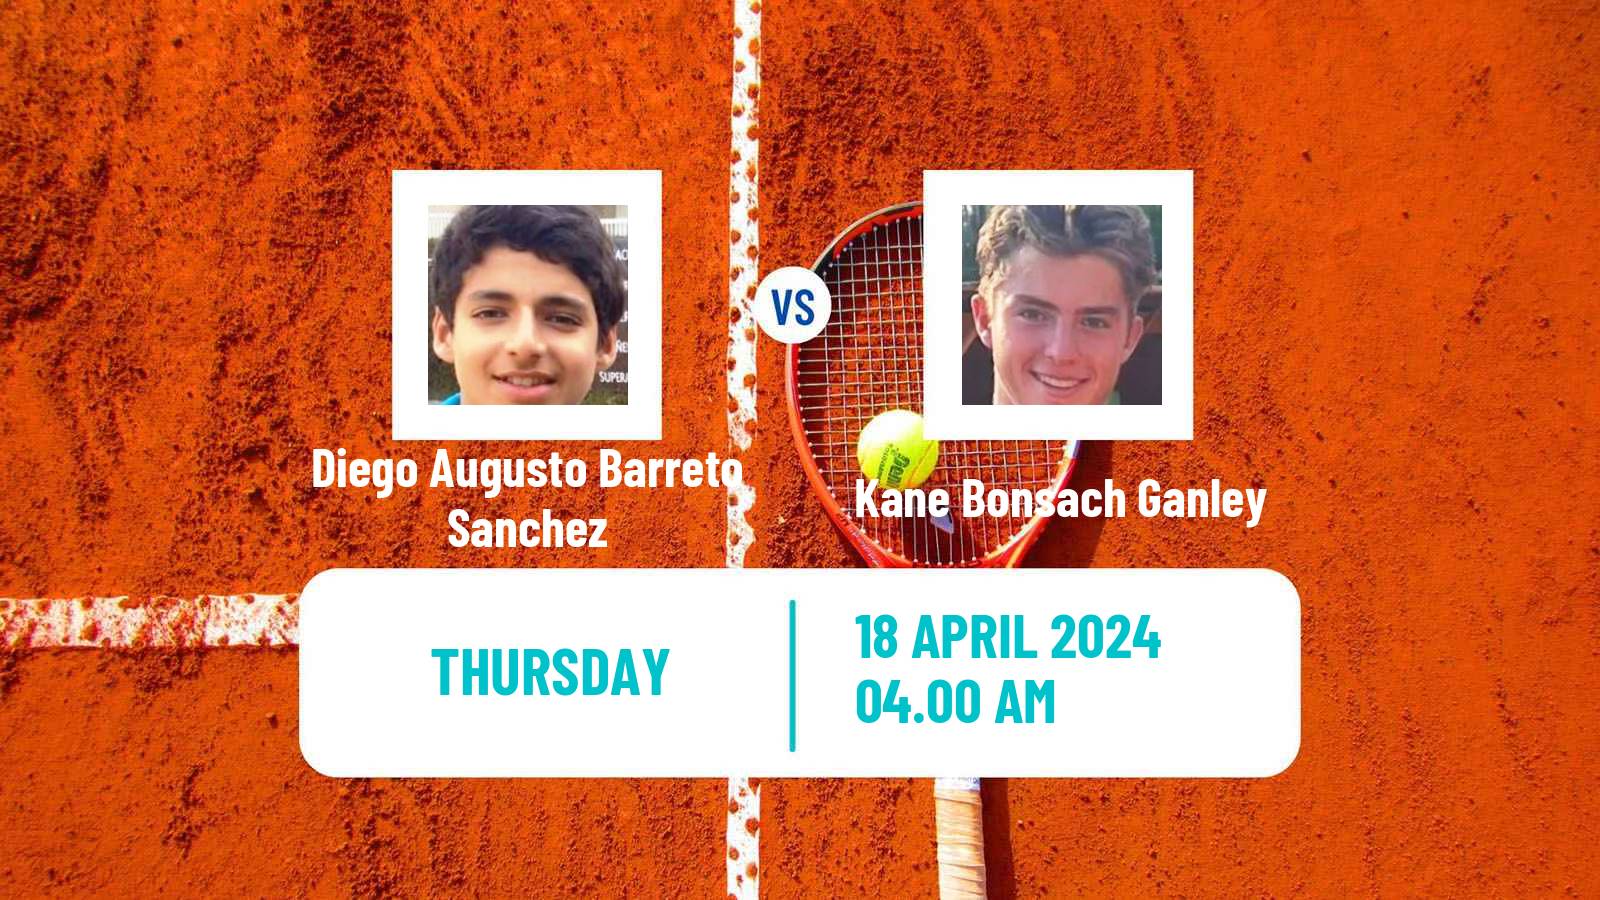 Tennis ITF M15 Telde 2 Men Diego Augusto Barreto Sanchez - Kane Bonsach Ganley